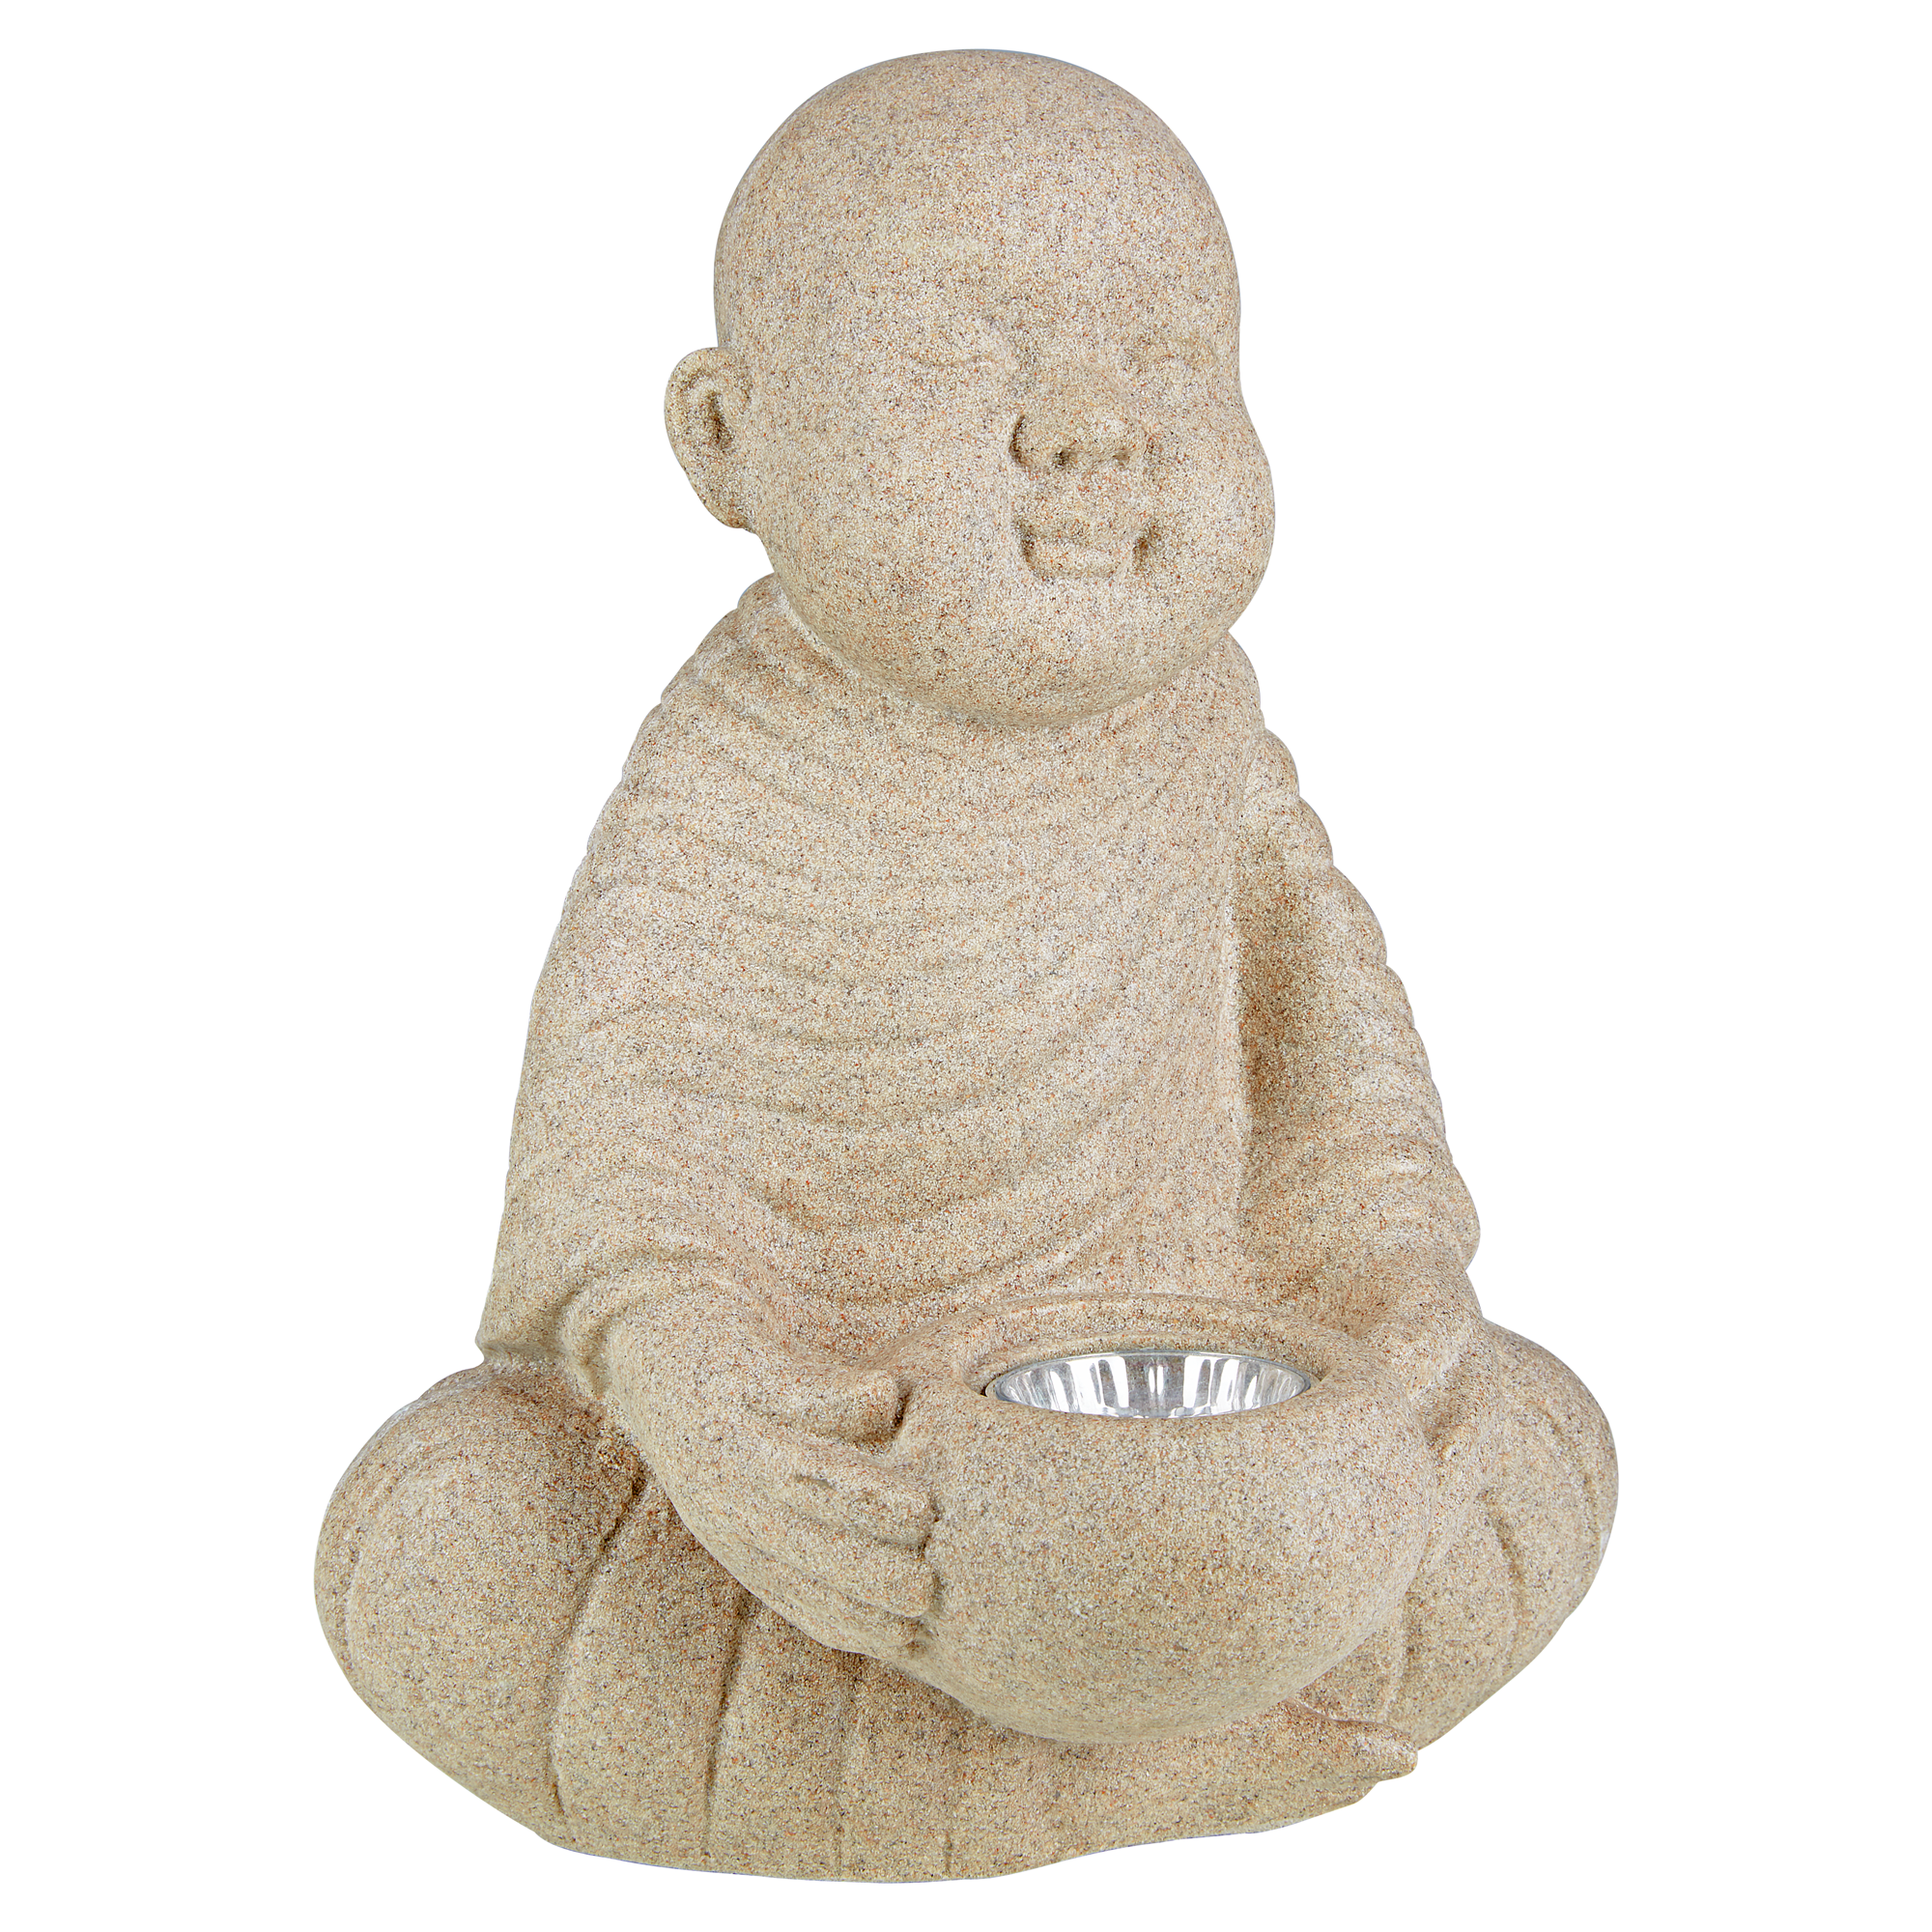 LED-Solarleuchte 'Buddha' 22 x 28 cm sand